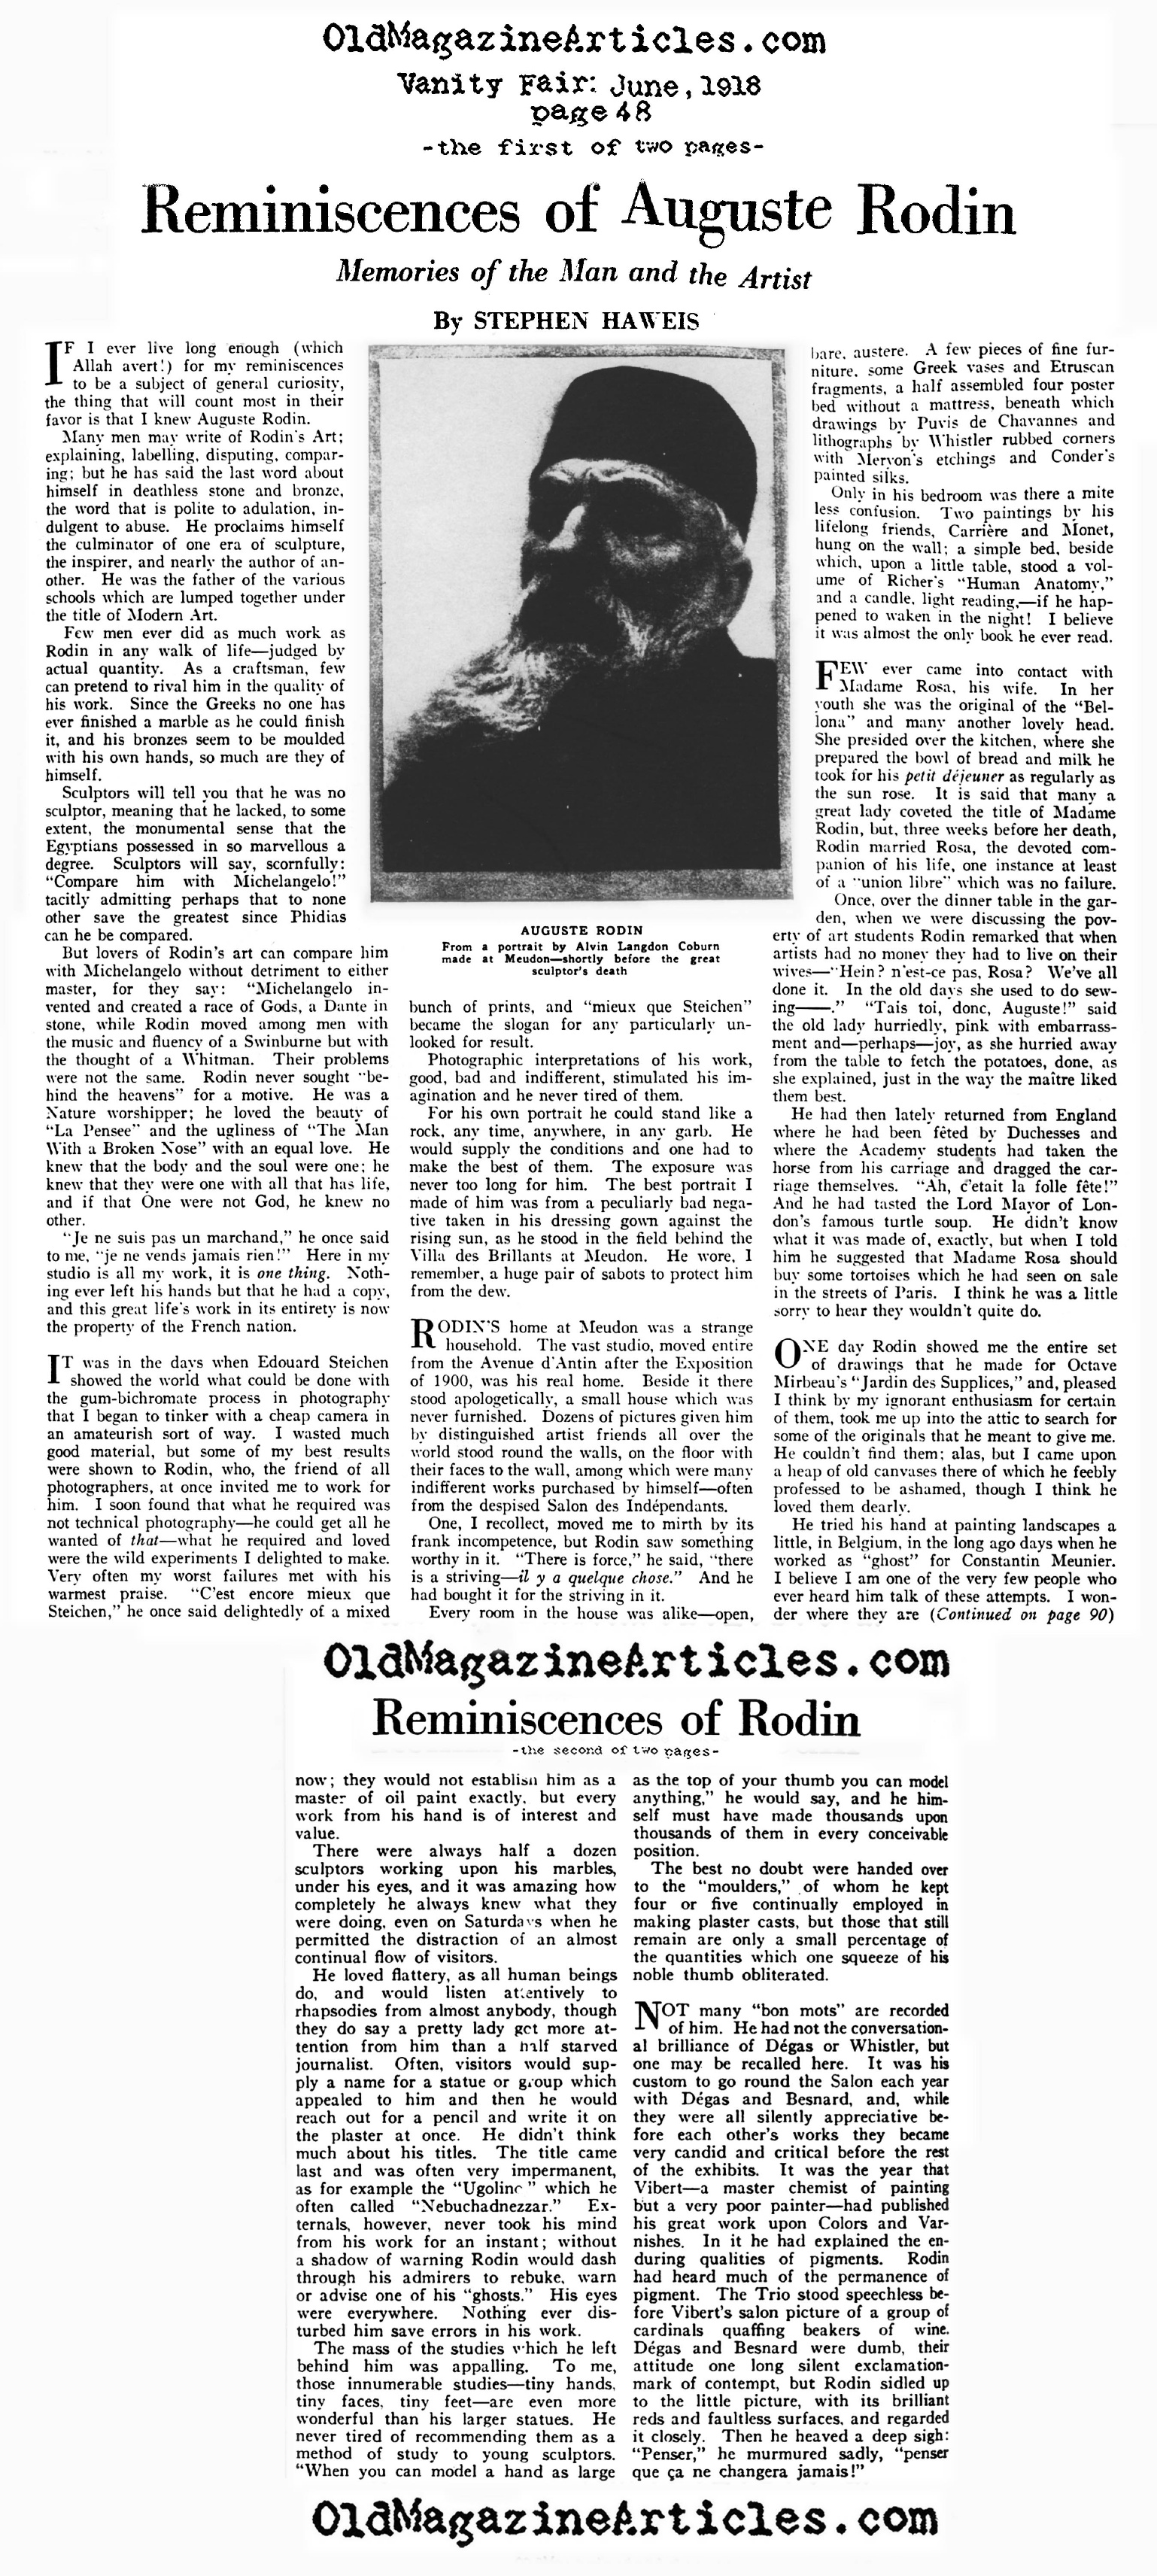 Reminiscences of August Rodin (Vanity Fair Magazine, 1918)